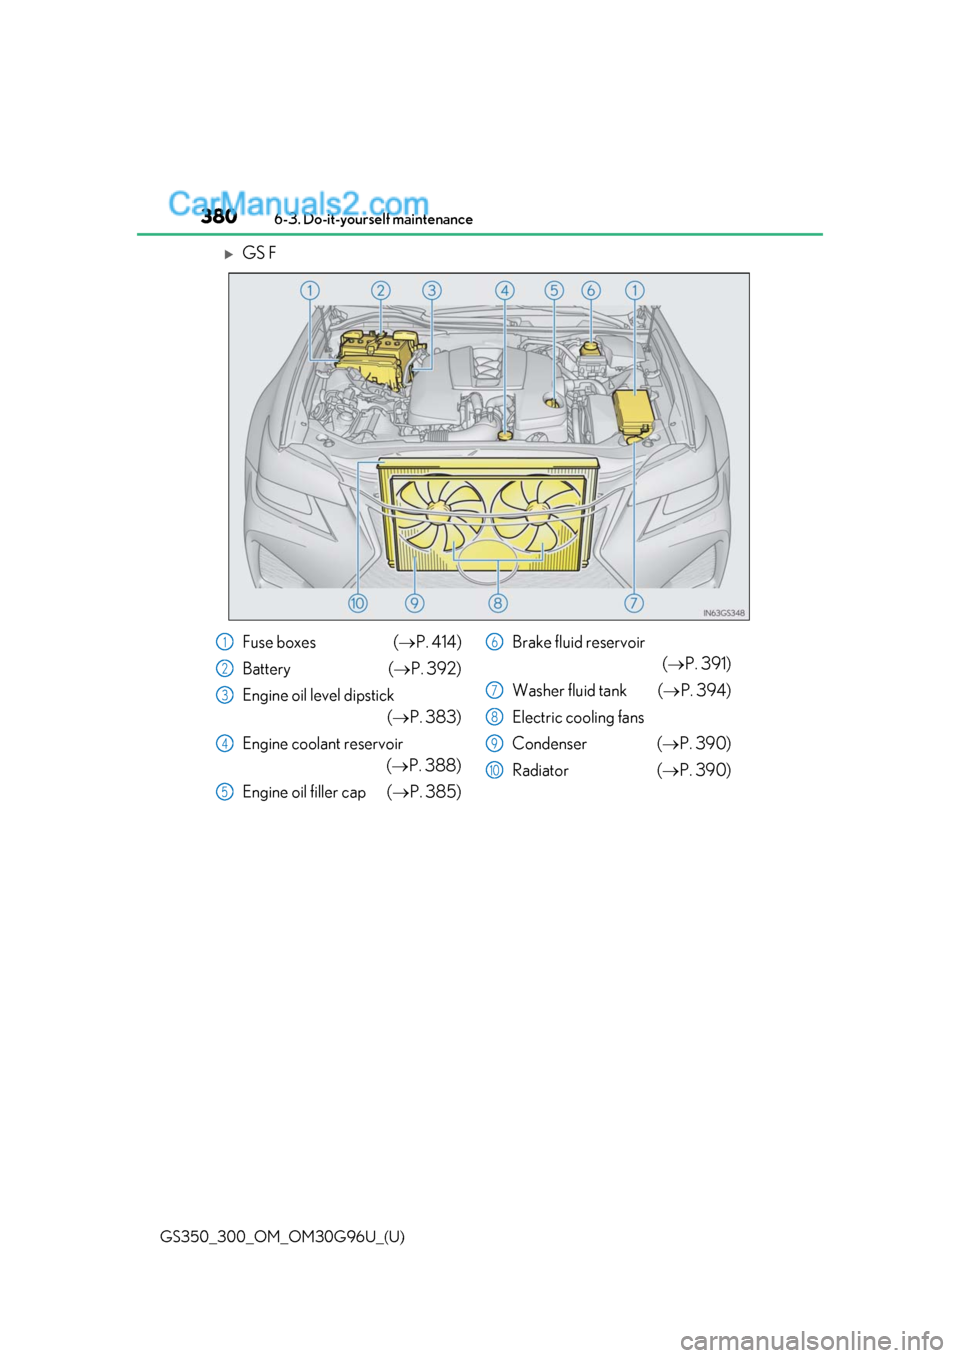 Lexus GS300 2019 User Guide 380
GS350_300_OM_OM30G96U_(U)6-3. Do-it-yourself maintenance
GS F
Fuse boxes (
P. 414)
Battery (P. 392)
Engine oil level dipstick (P. 383)
Engine coolant reservoir (P. 388)
Engine oil f